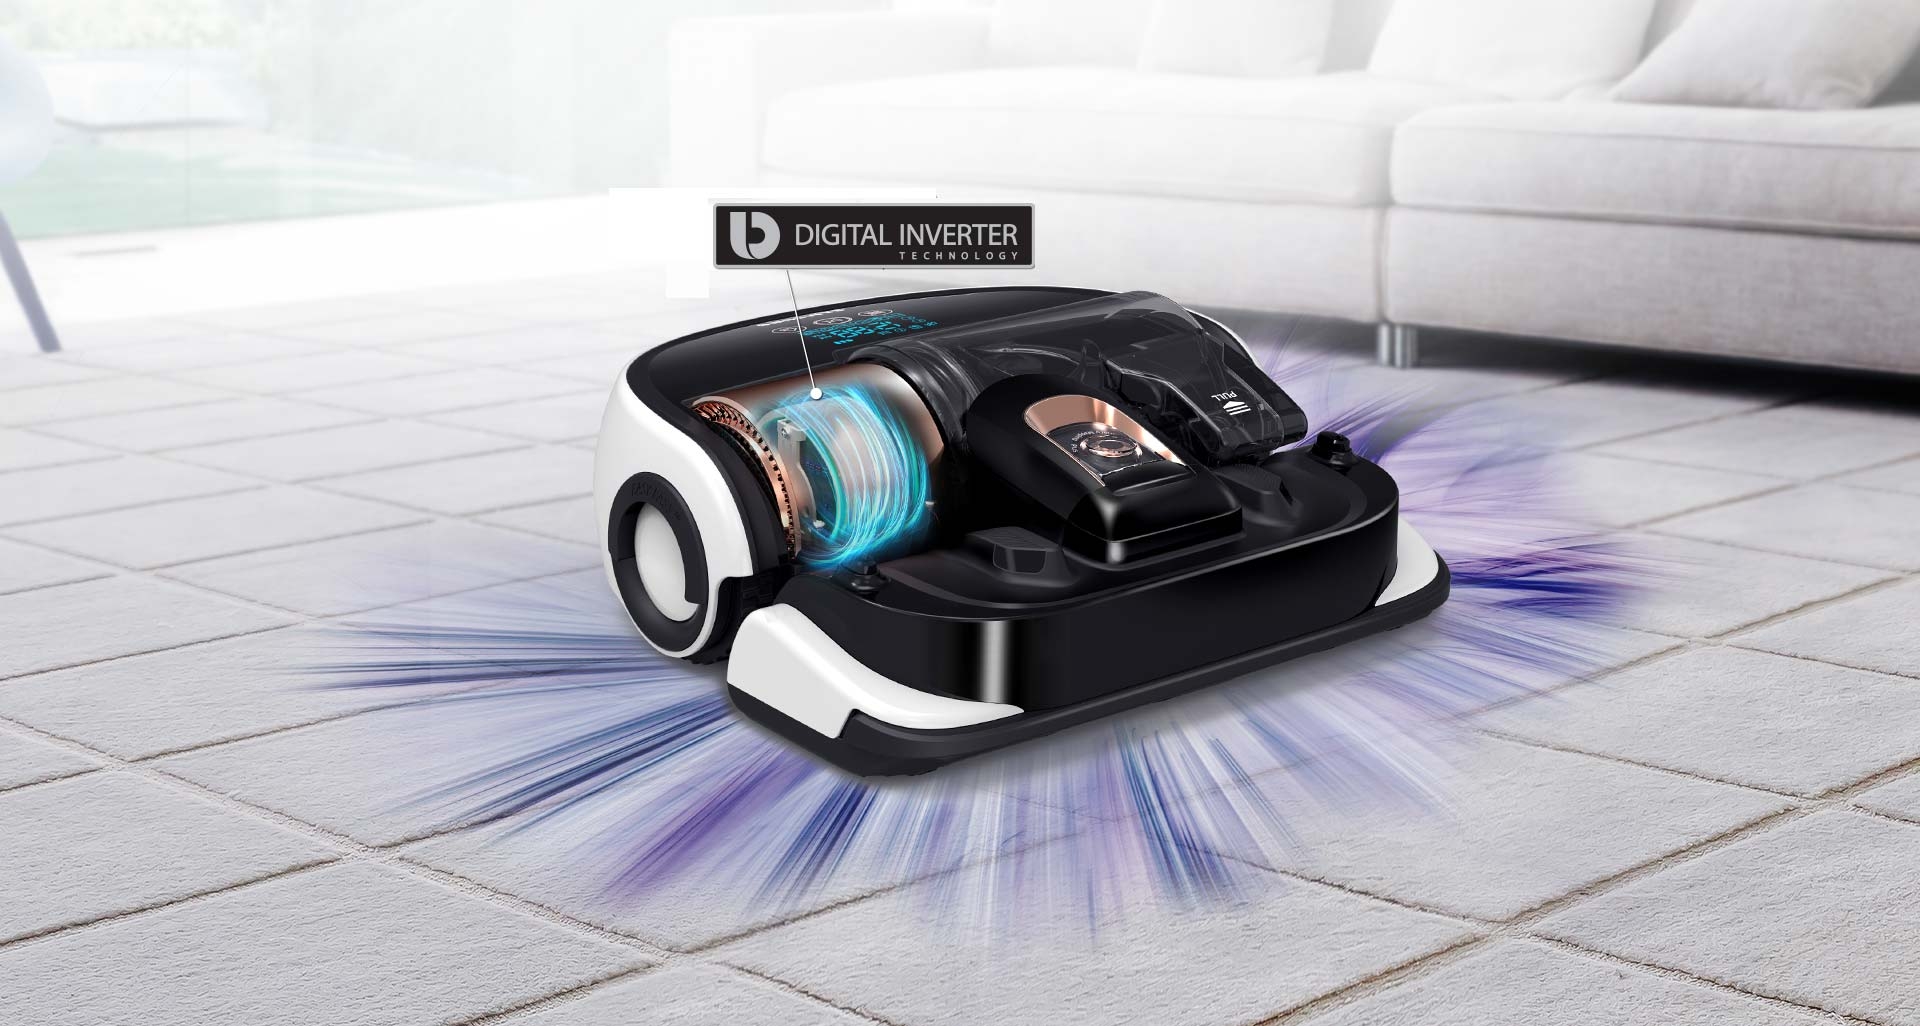 Samsung's most powerful robotic vacuum cleaner